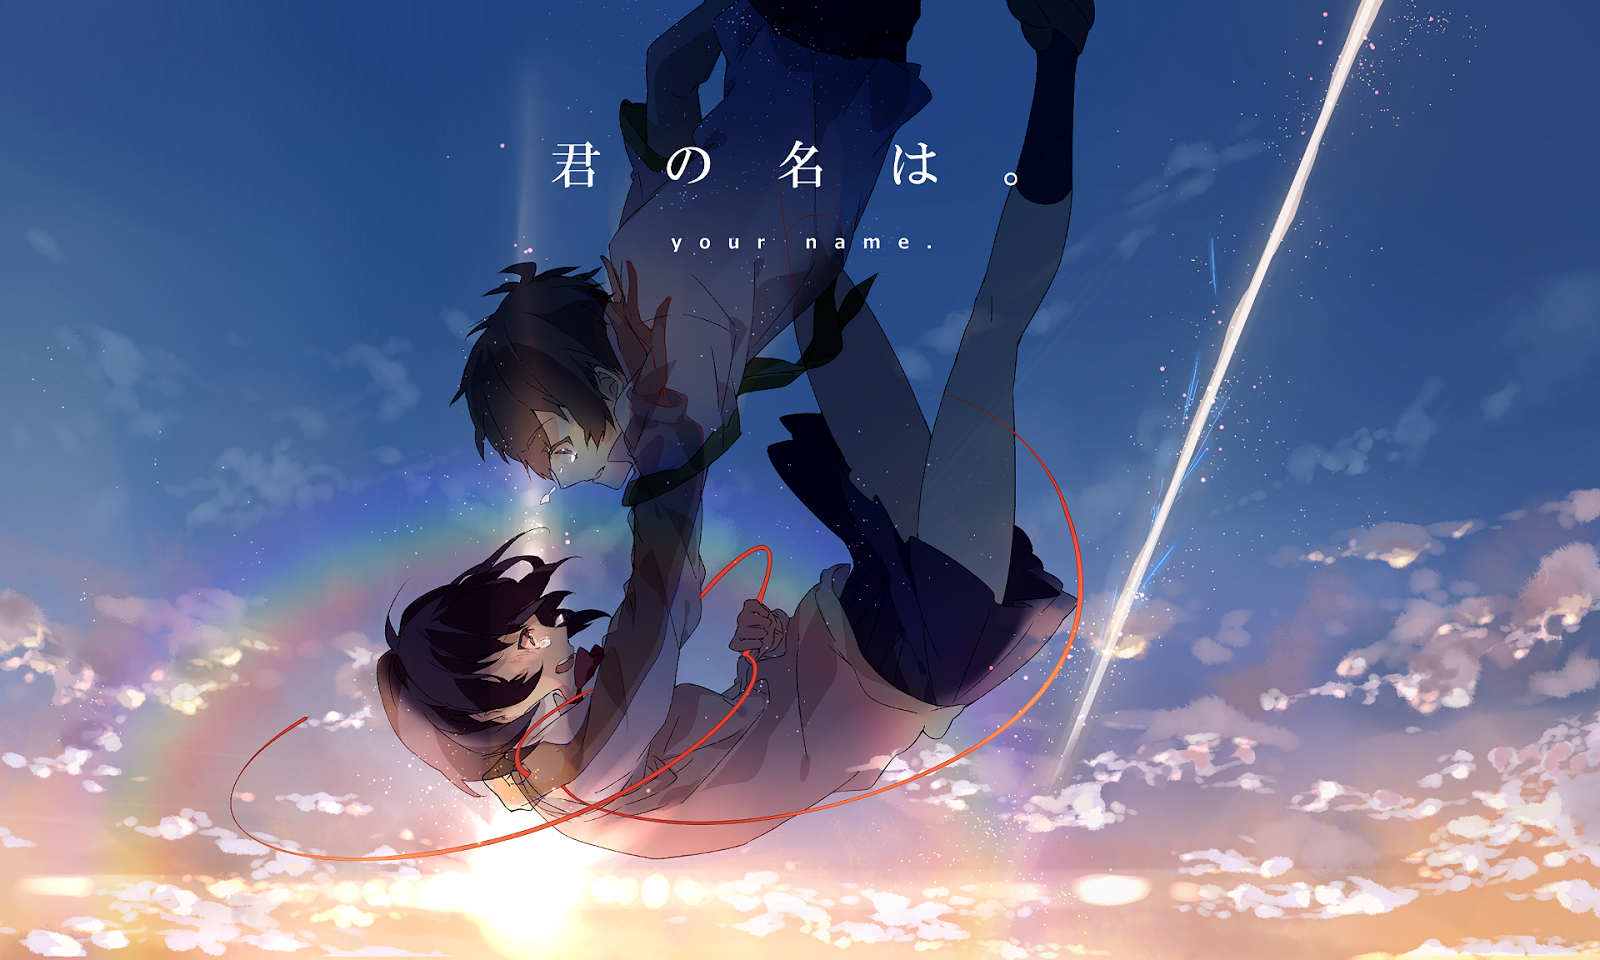 Kimi no Na wa Filme Dublado HD Animedir Google Chrome 09 04 2019 16 40 16 